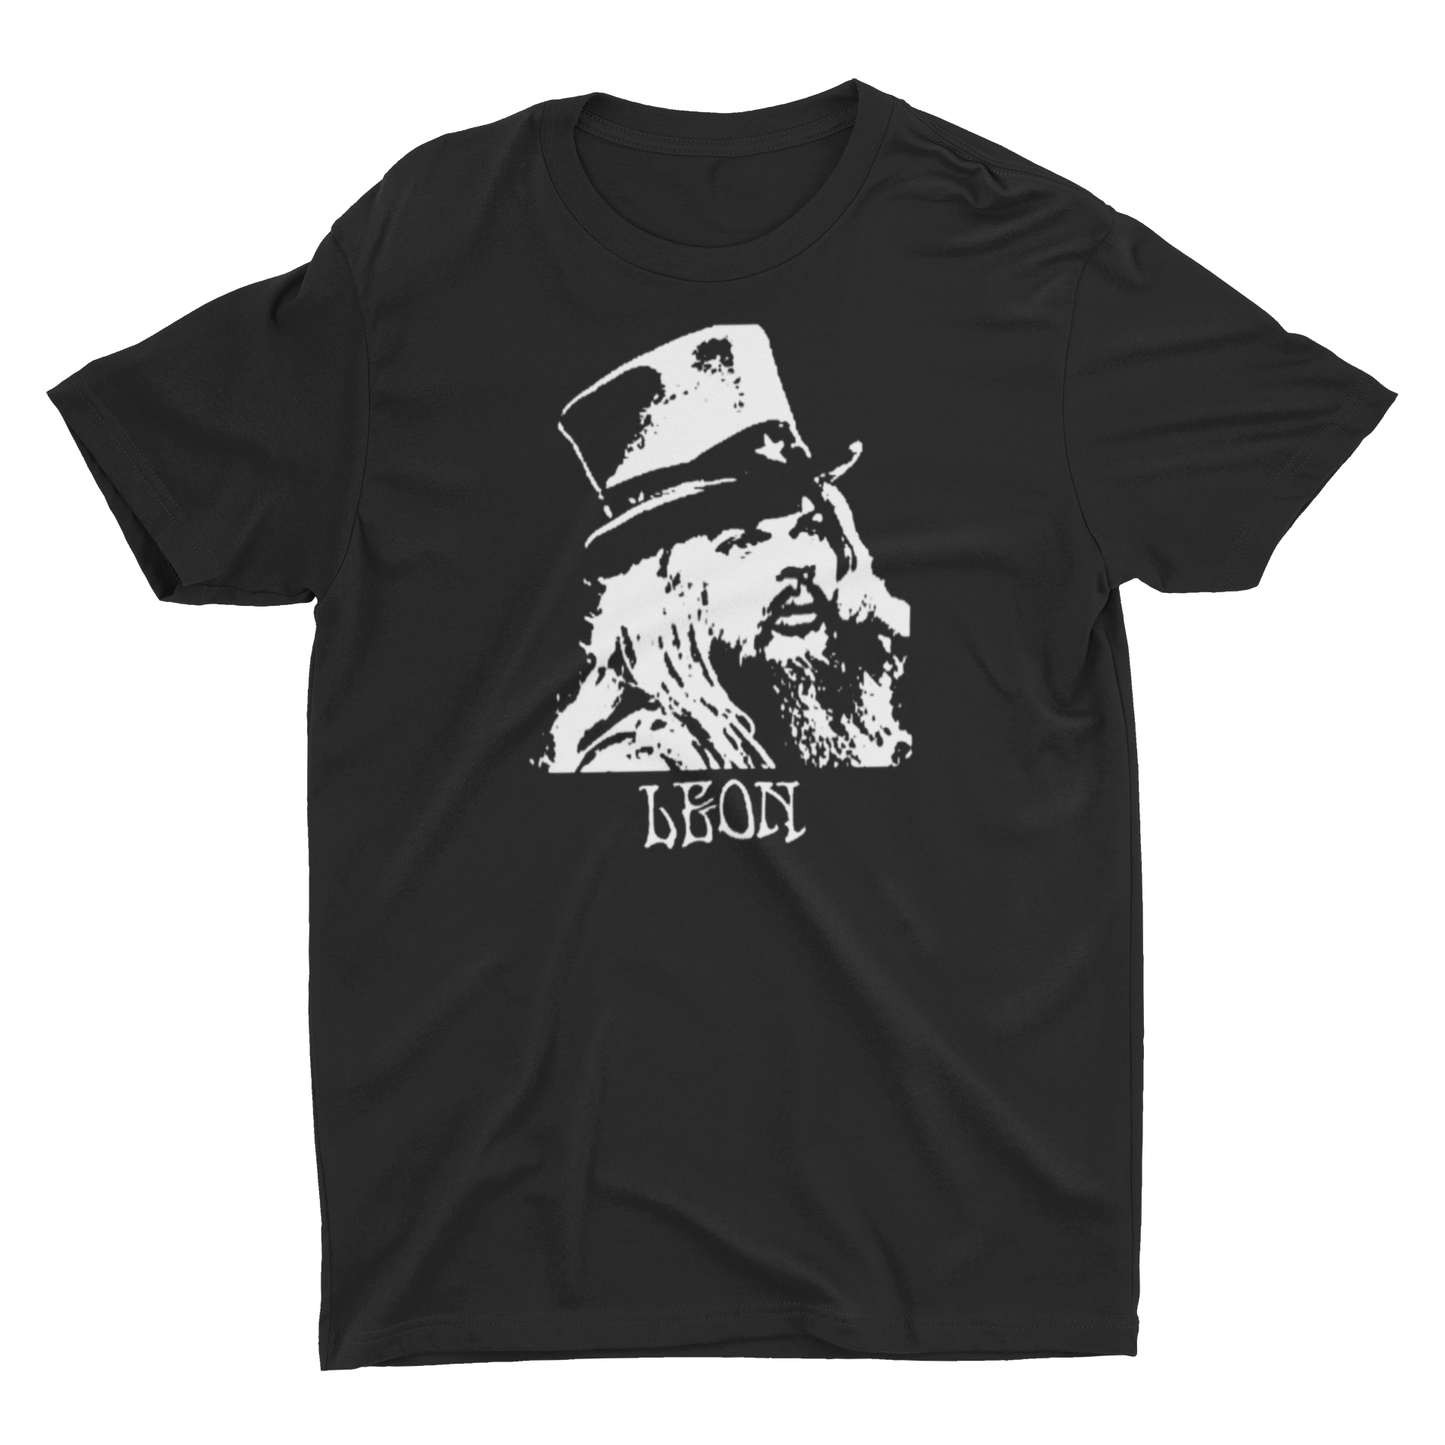 Leon Russell T Shirt t shirts rockviewtees.com